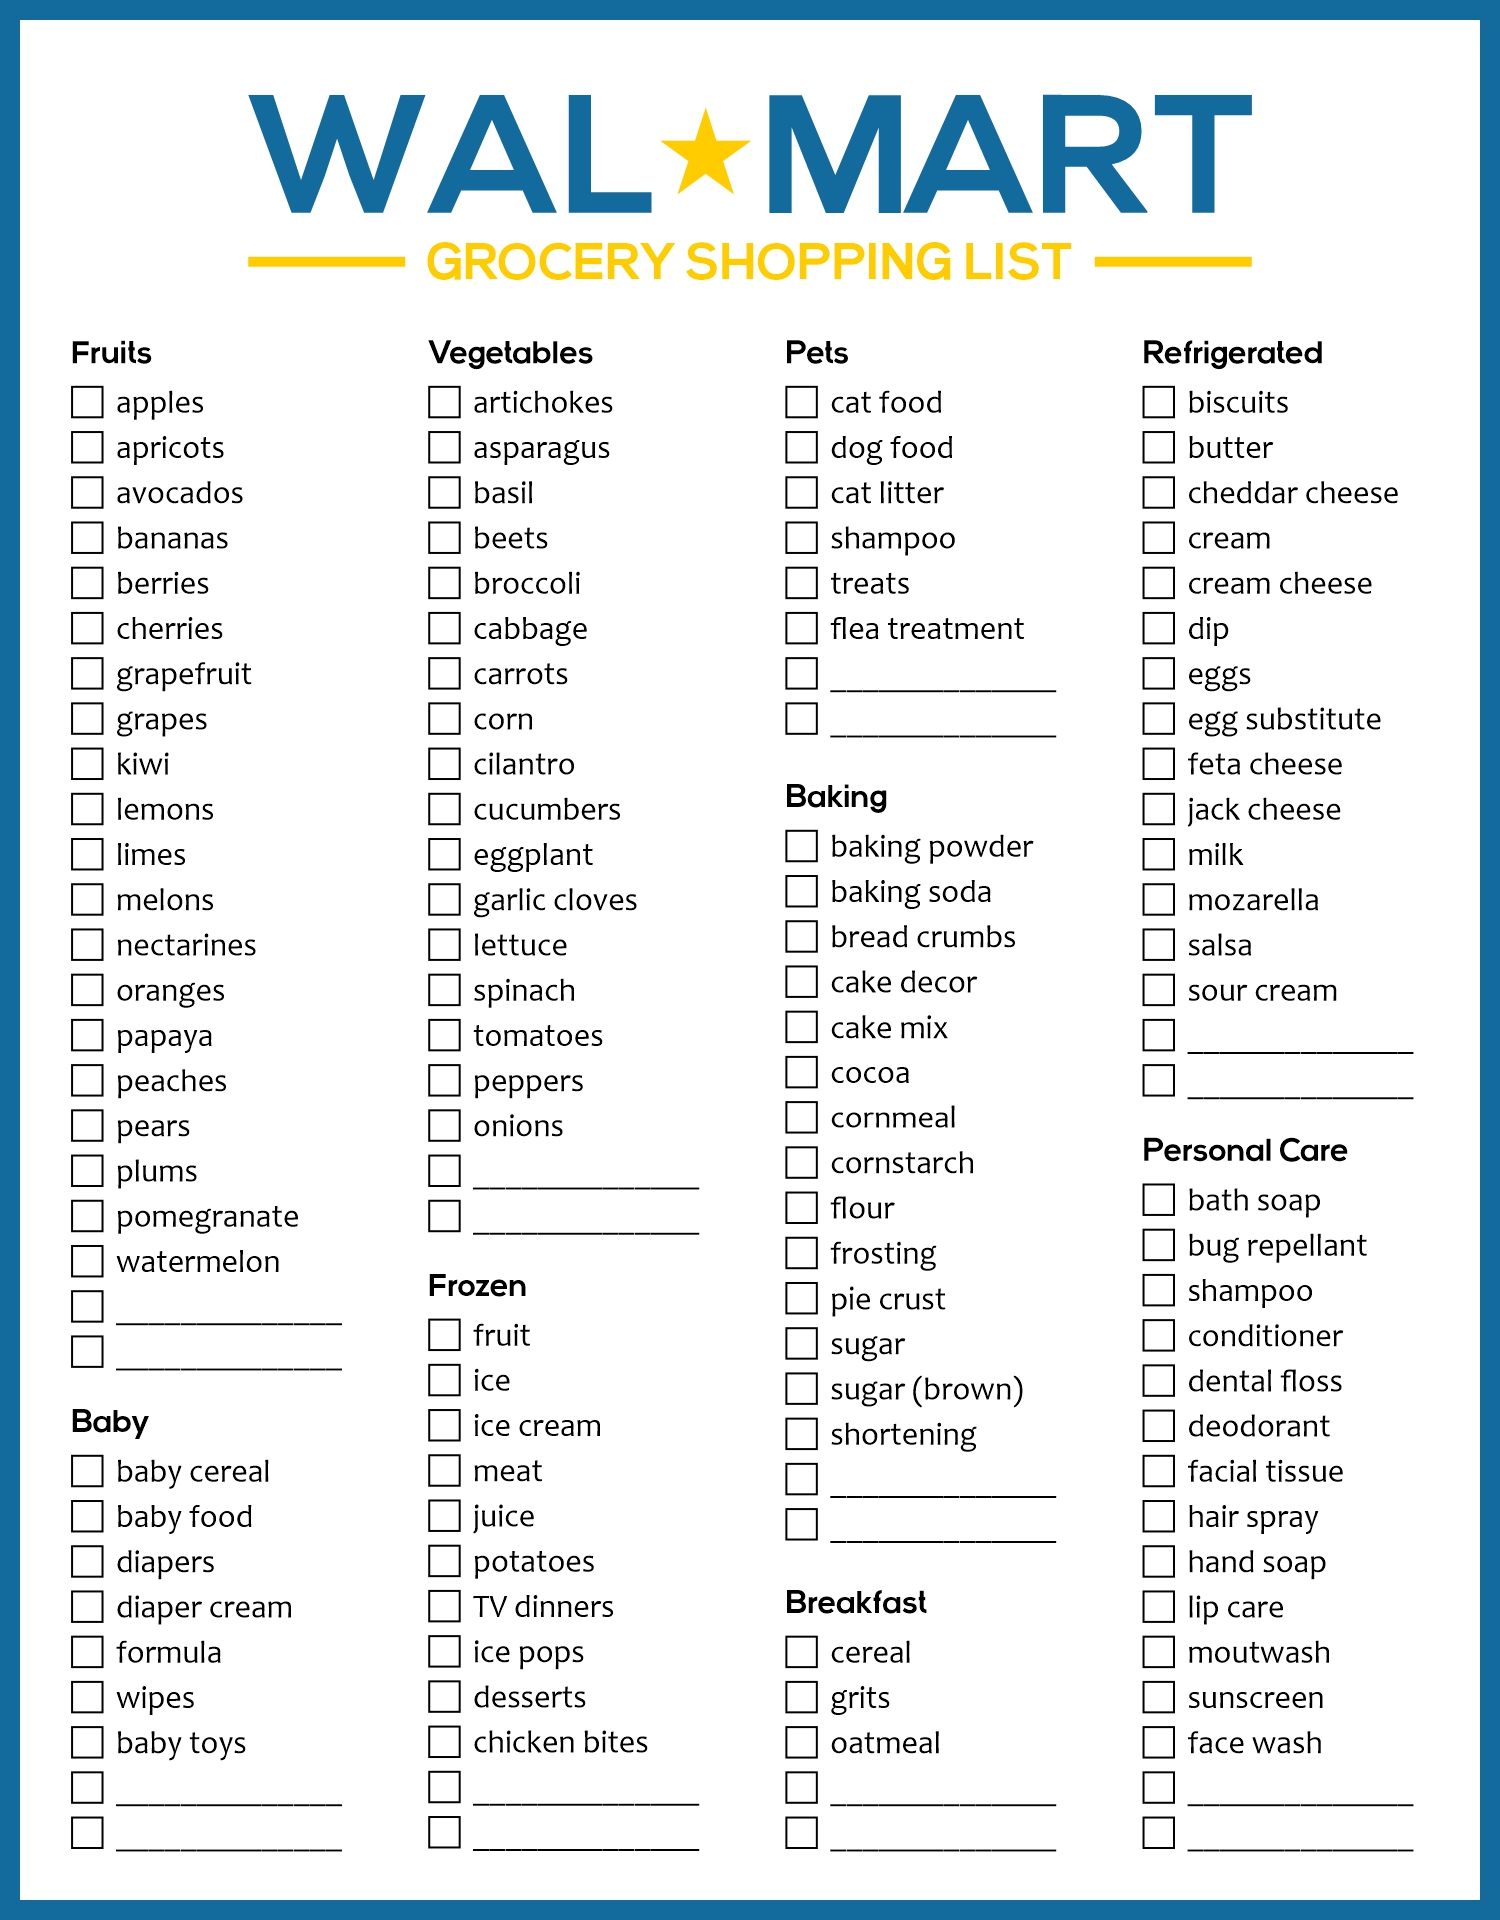 6 Best Images of Walmart Grocery List Printable - Free Printable ...